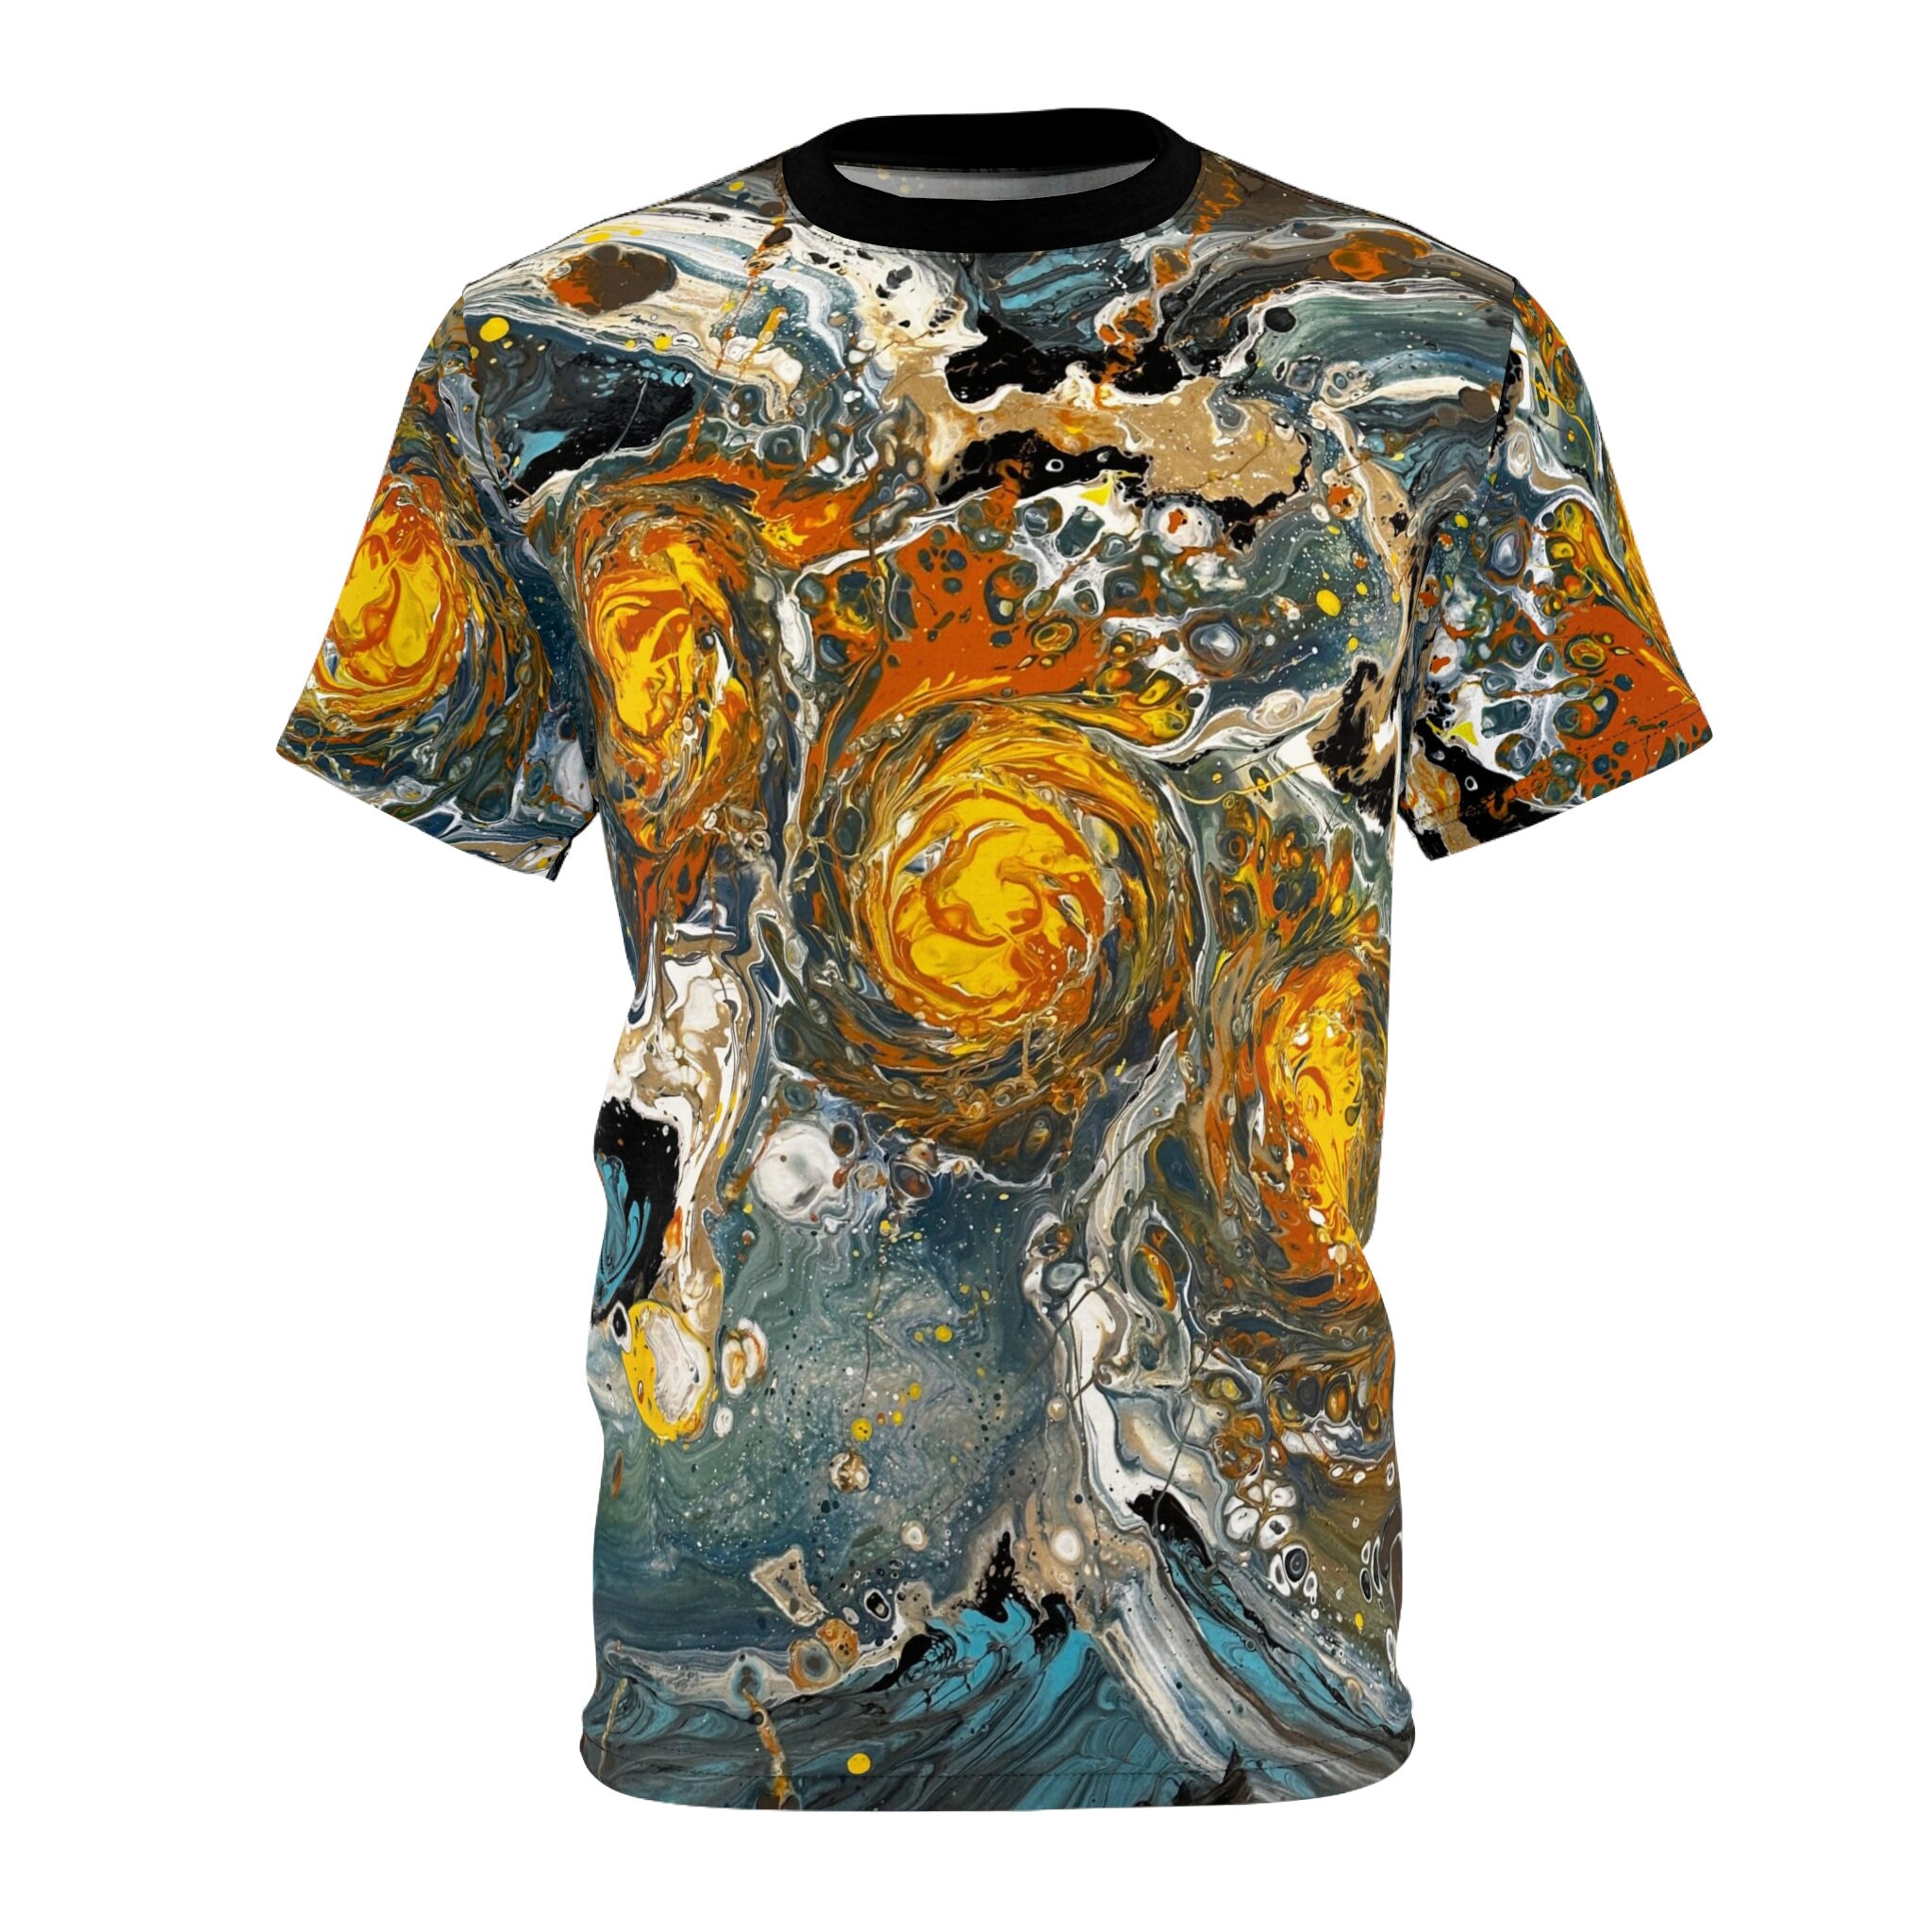 Discover Hurricane - AOP Painting Artistic Fluid Art Abstract 3D T-Shirt